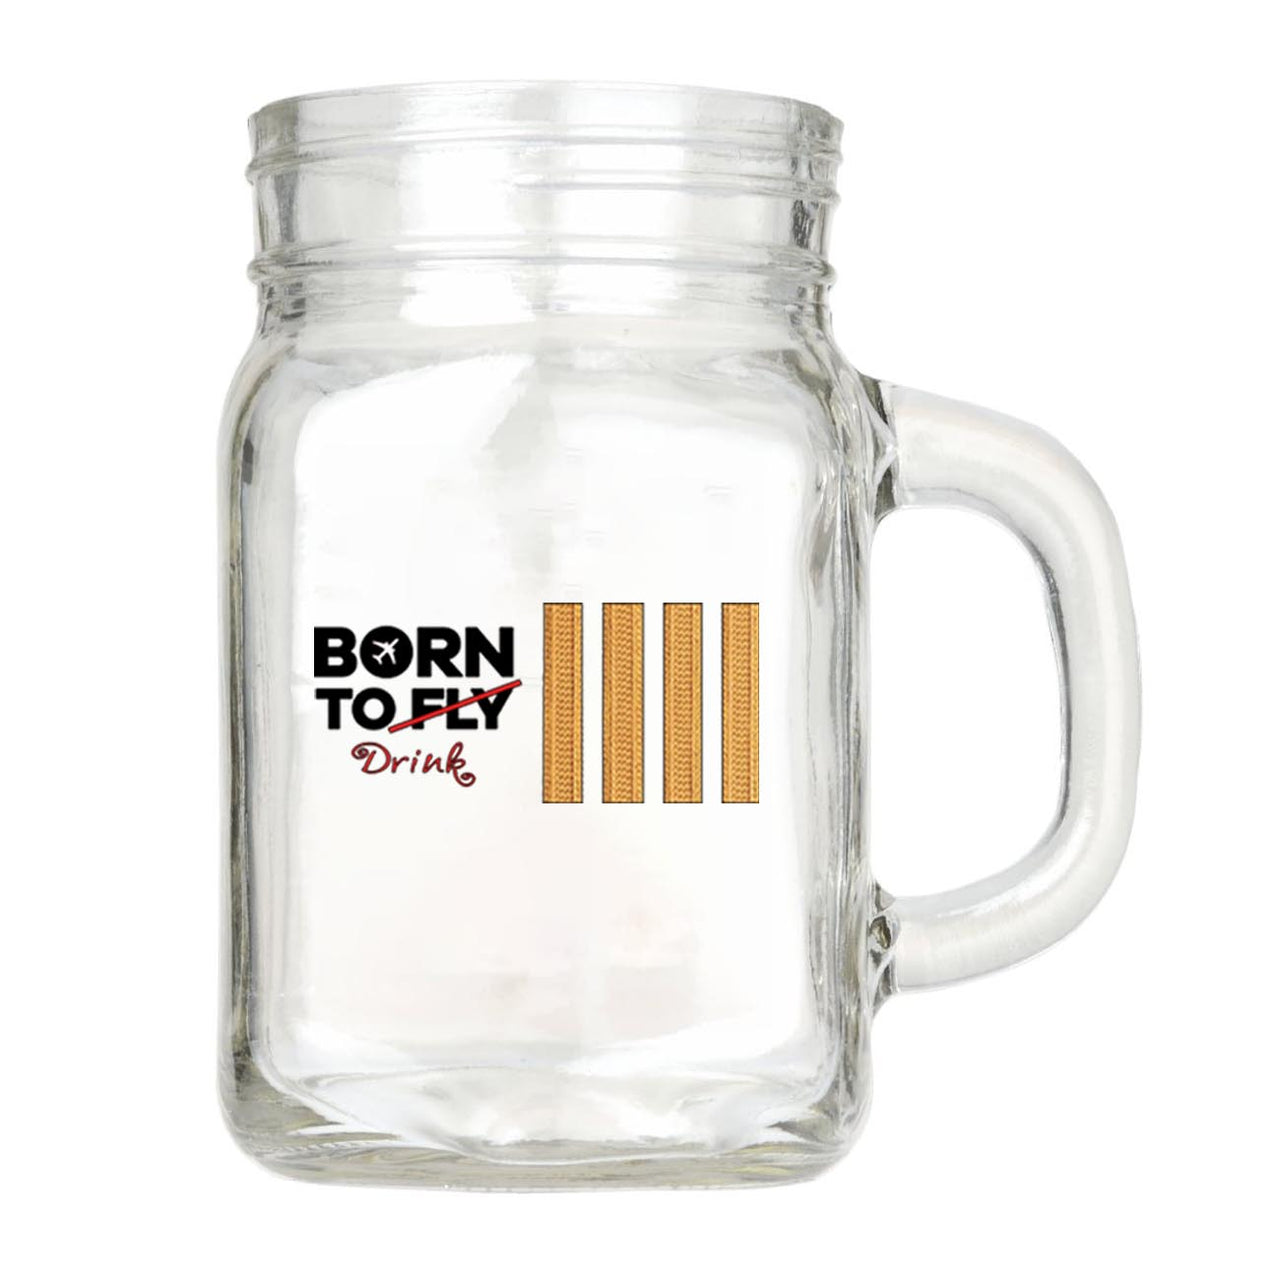 Born To Drink & 4 Lines Designed Cocktail Glasses